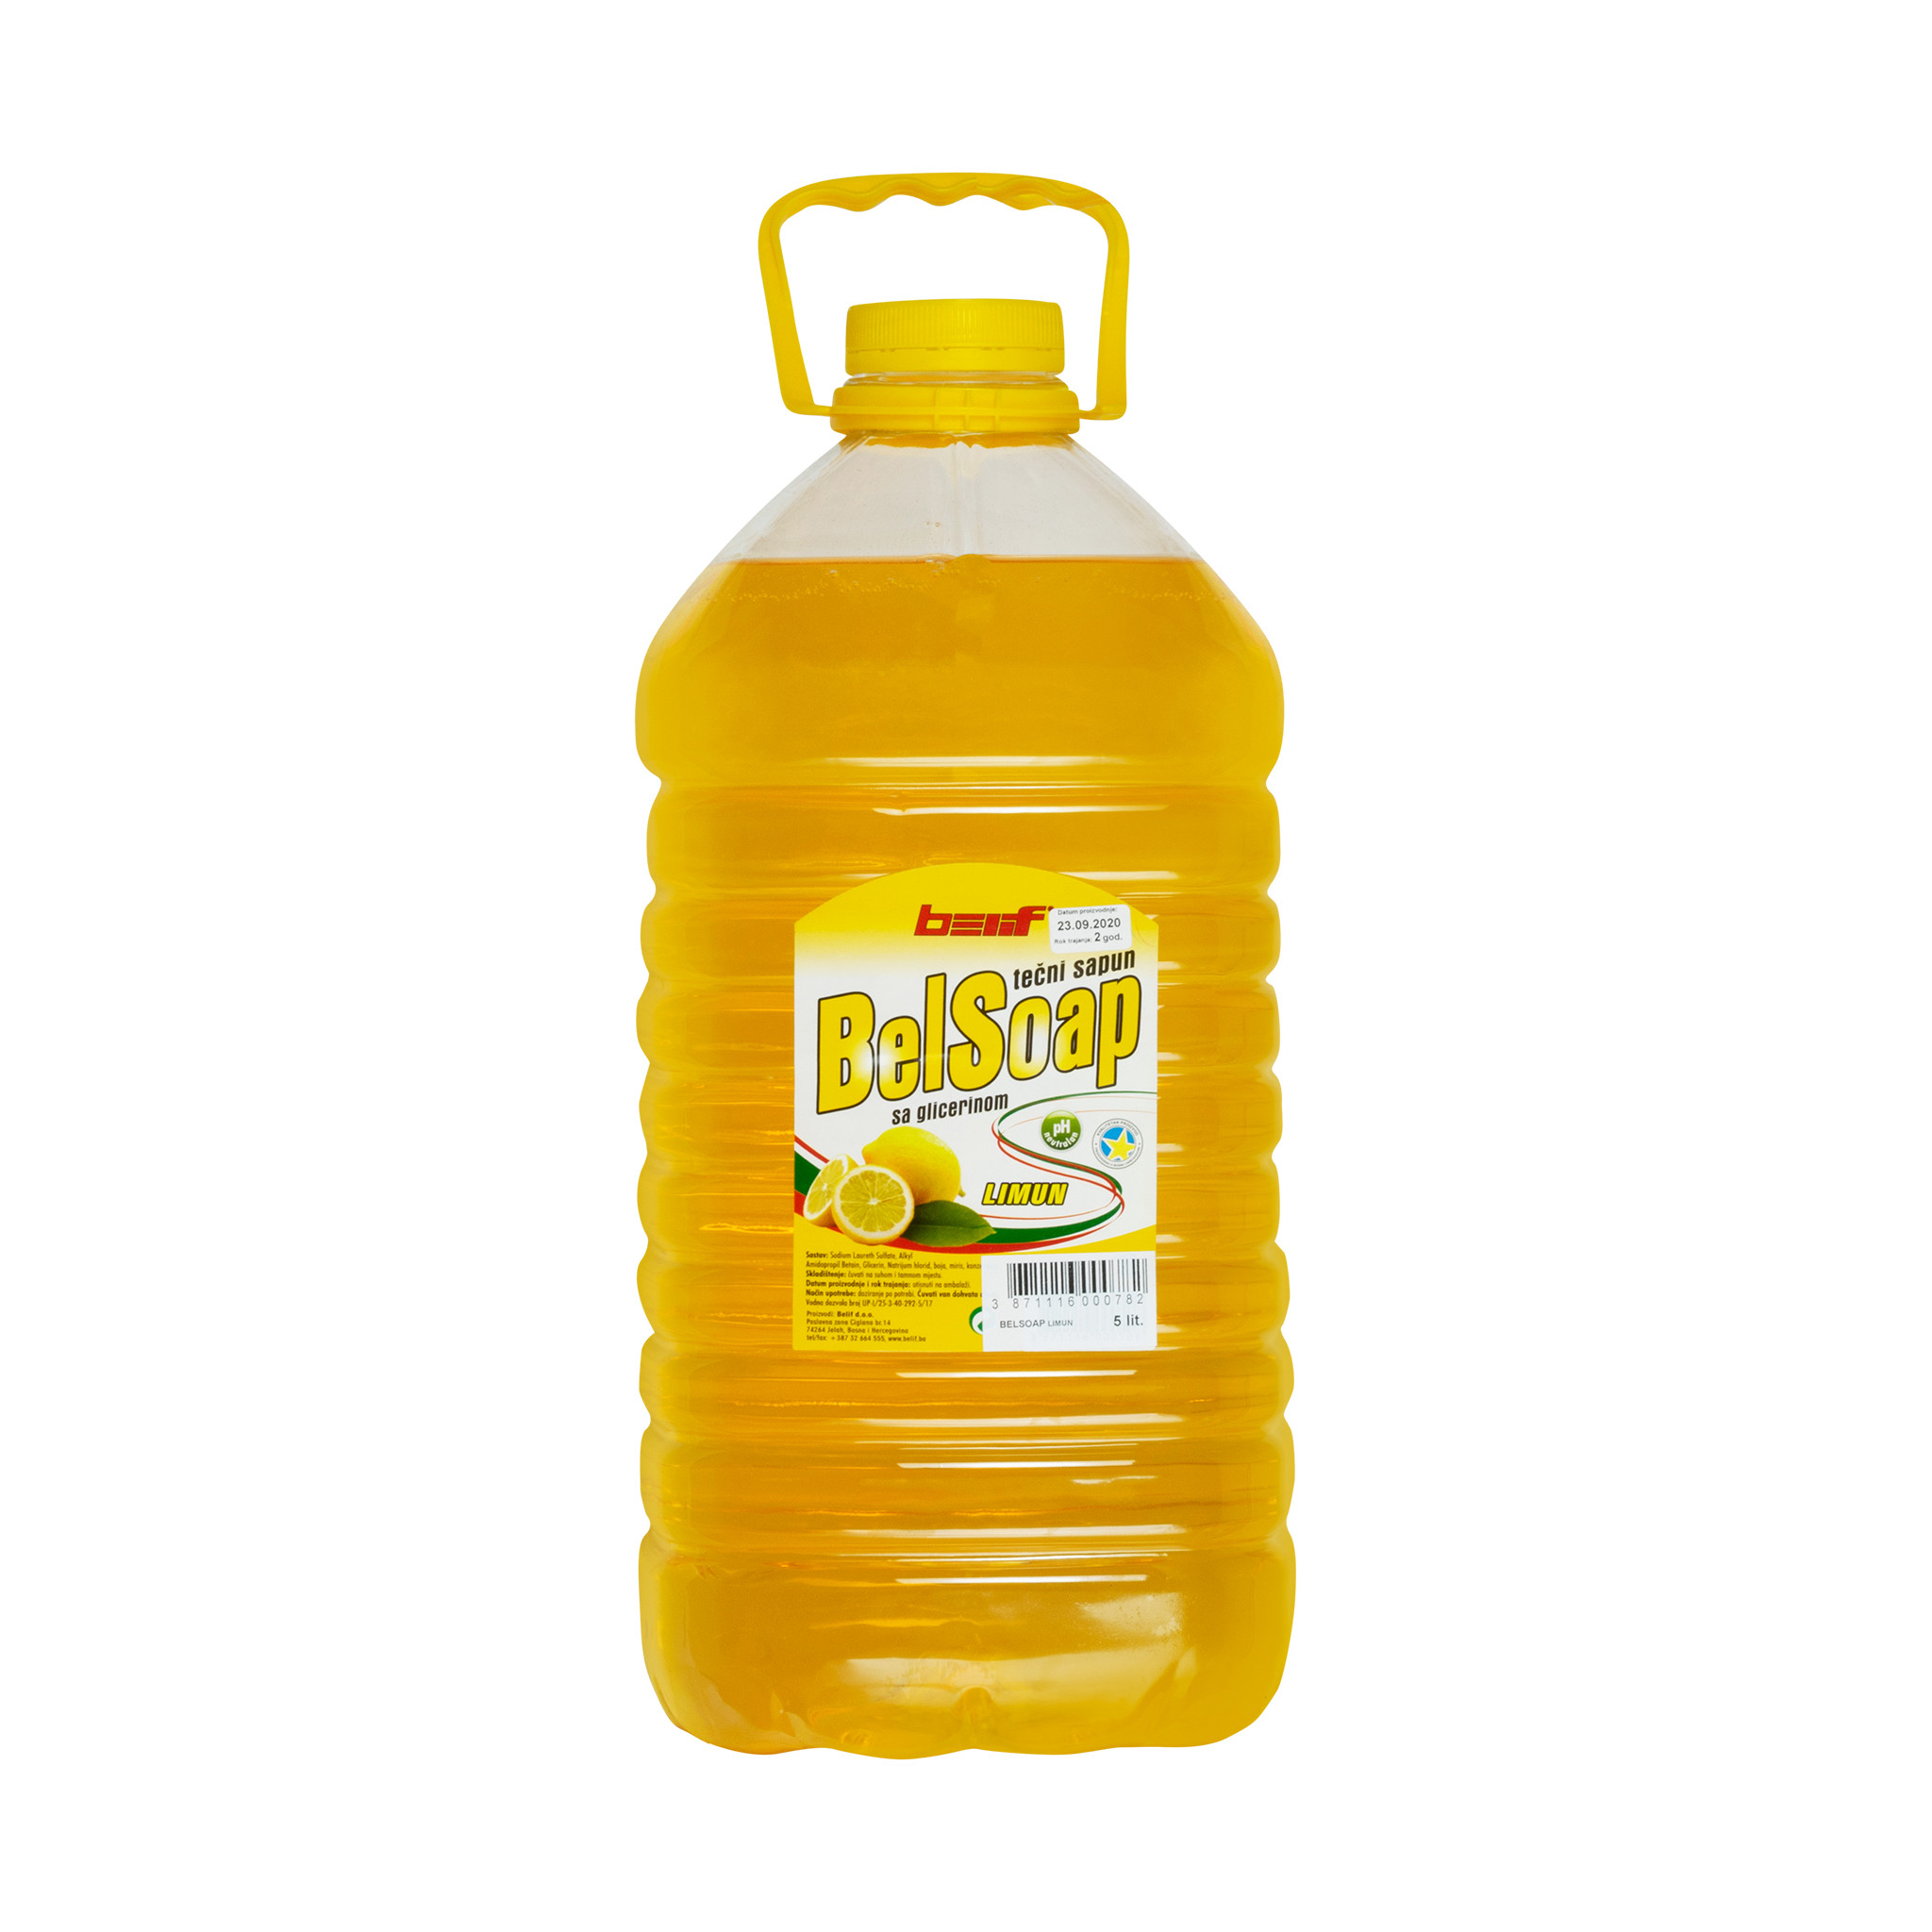 BelSoap tečni sapun limun 5L